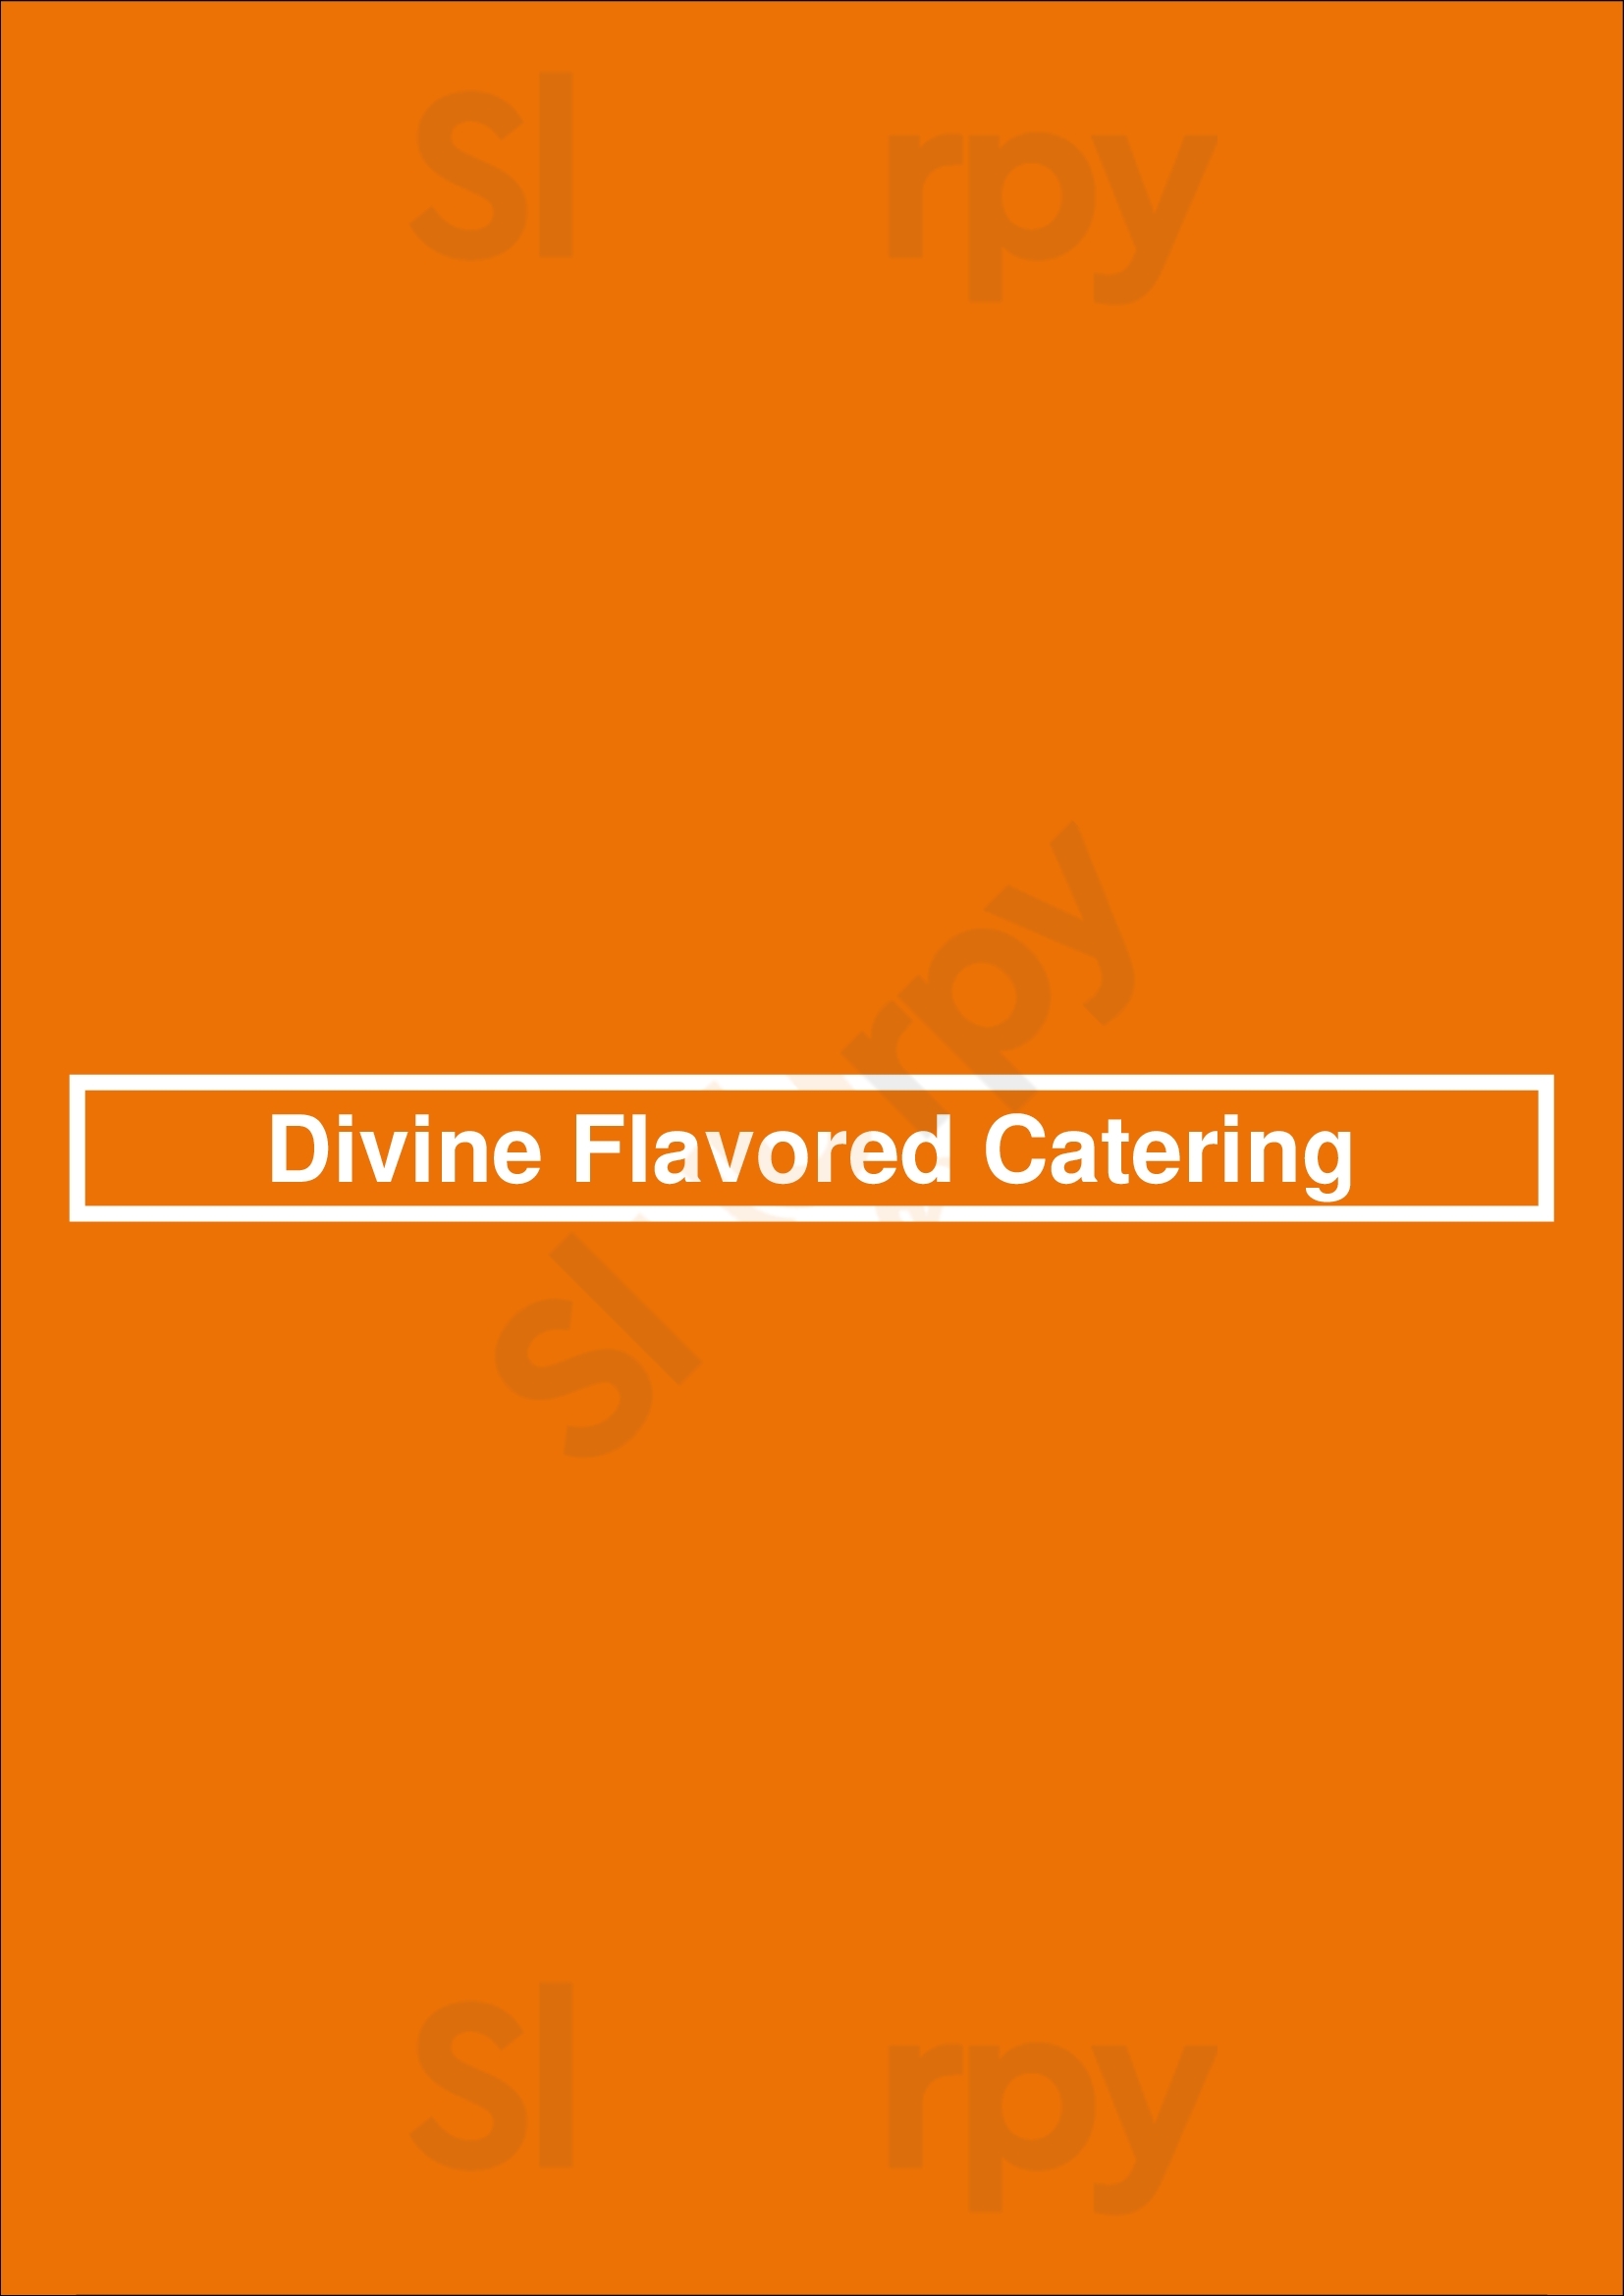 Divine Flavored Catering Brooklyn Menu - 1